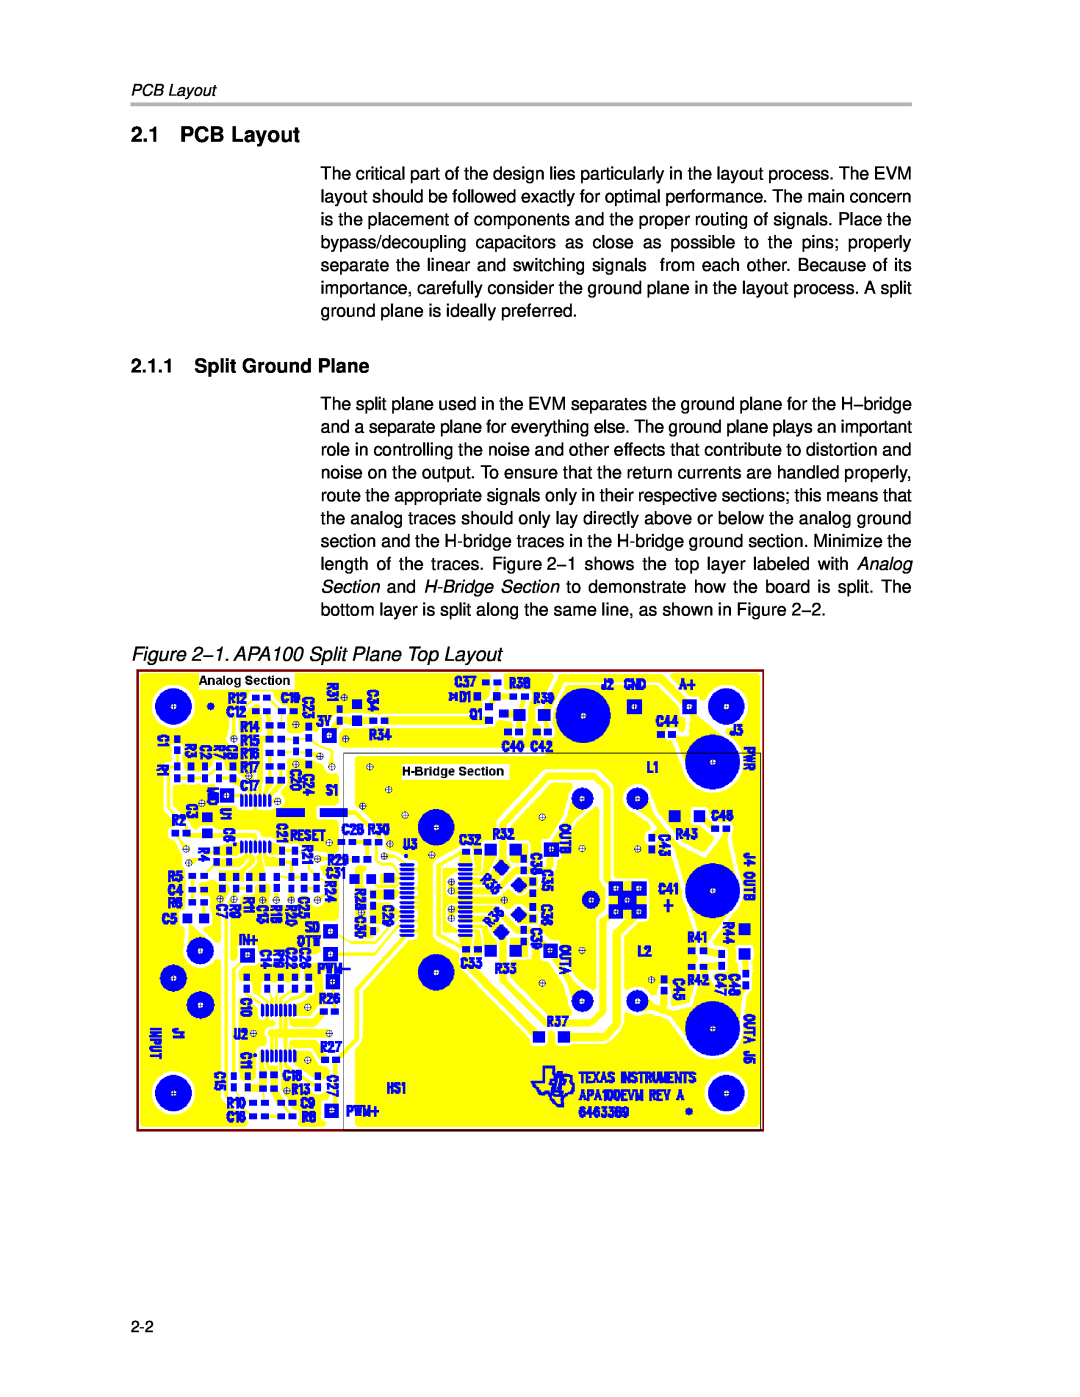 Texas Instruments APA100 manual PCB Layout, 2.1.1Split Ground Plane 